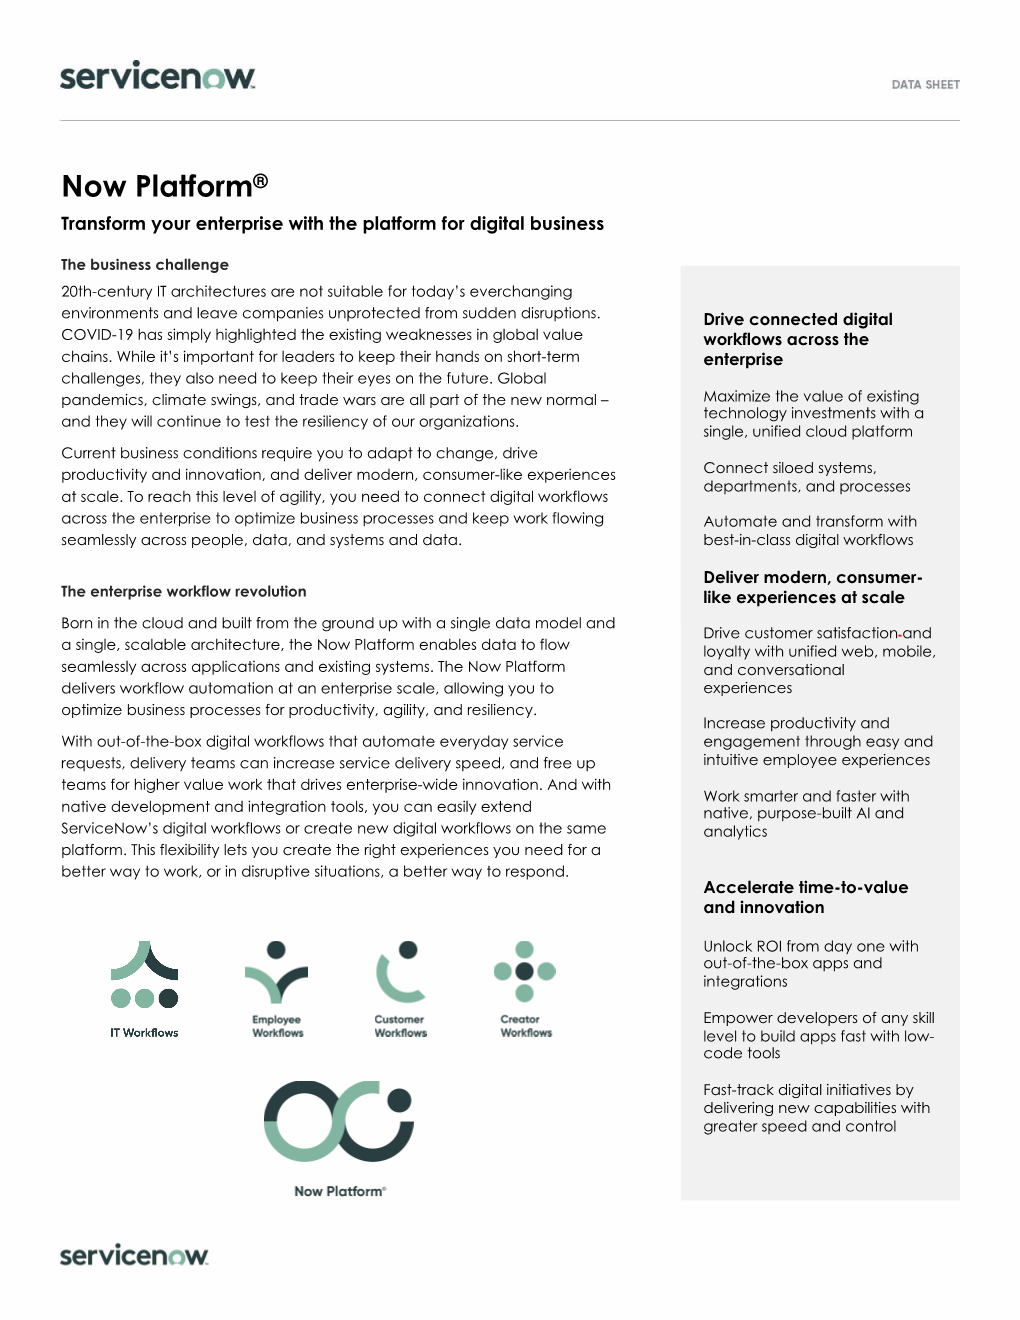 Now Platform® Transform Your Enterprise with the Platform for Digital Business